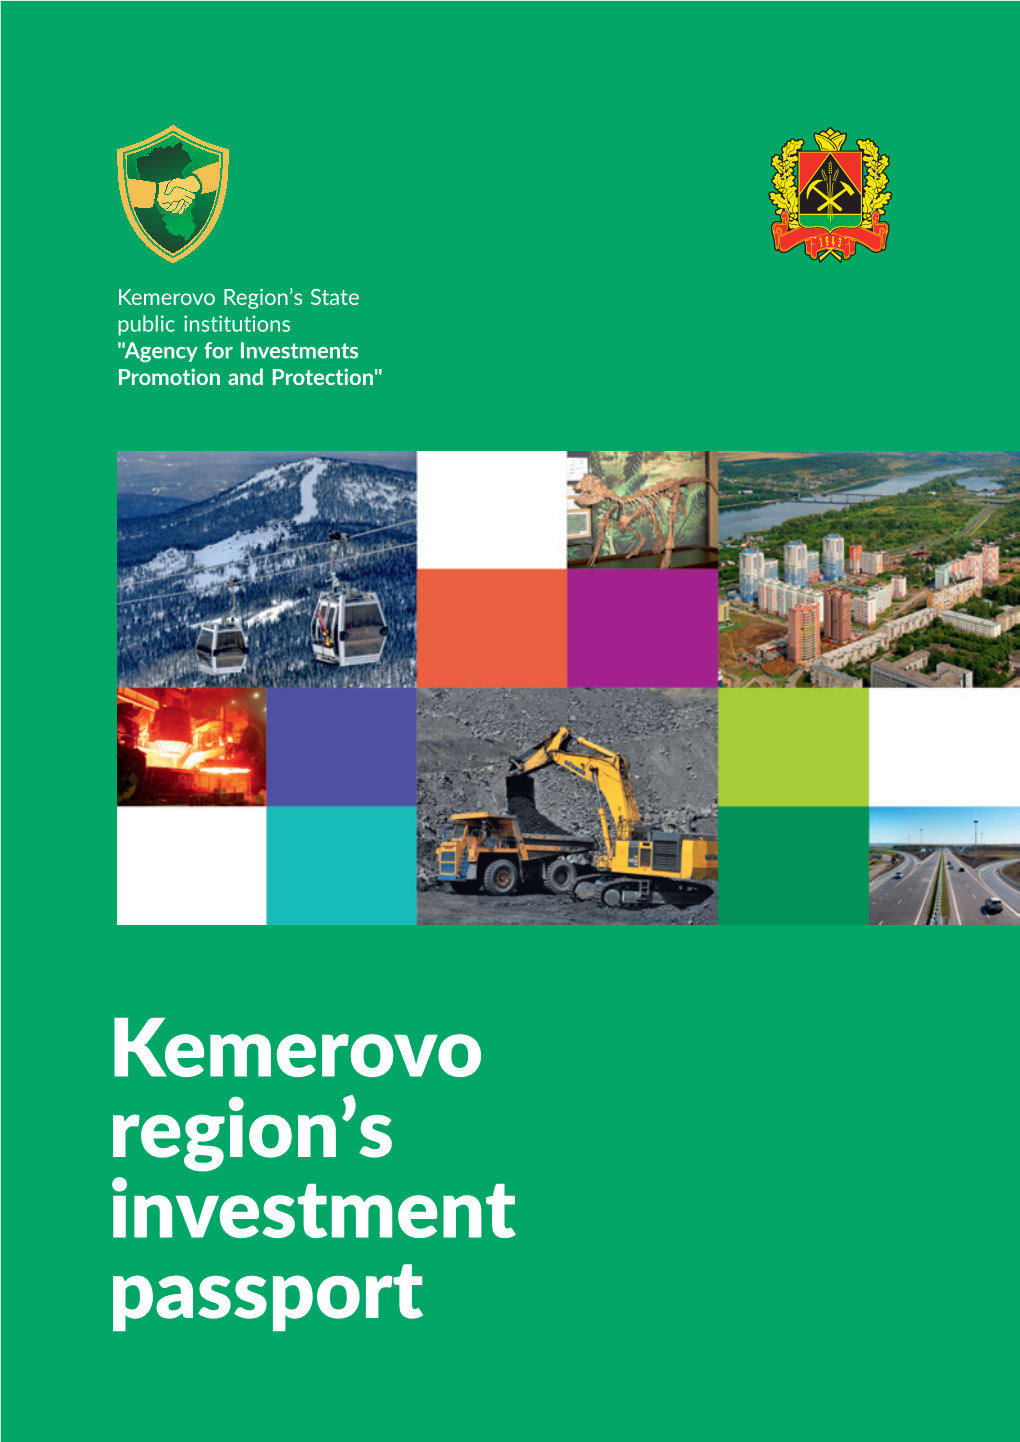 Kemerovo Region's Investment Passport